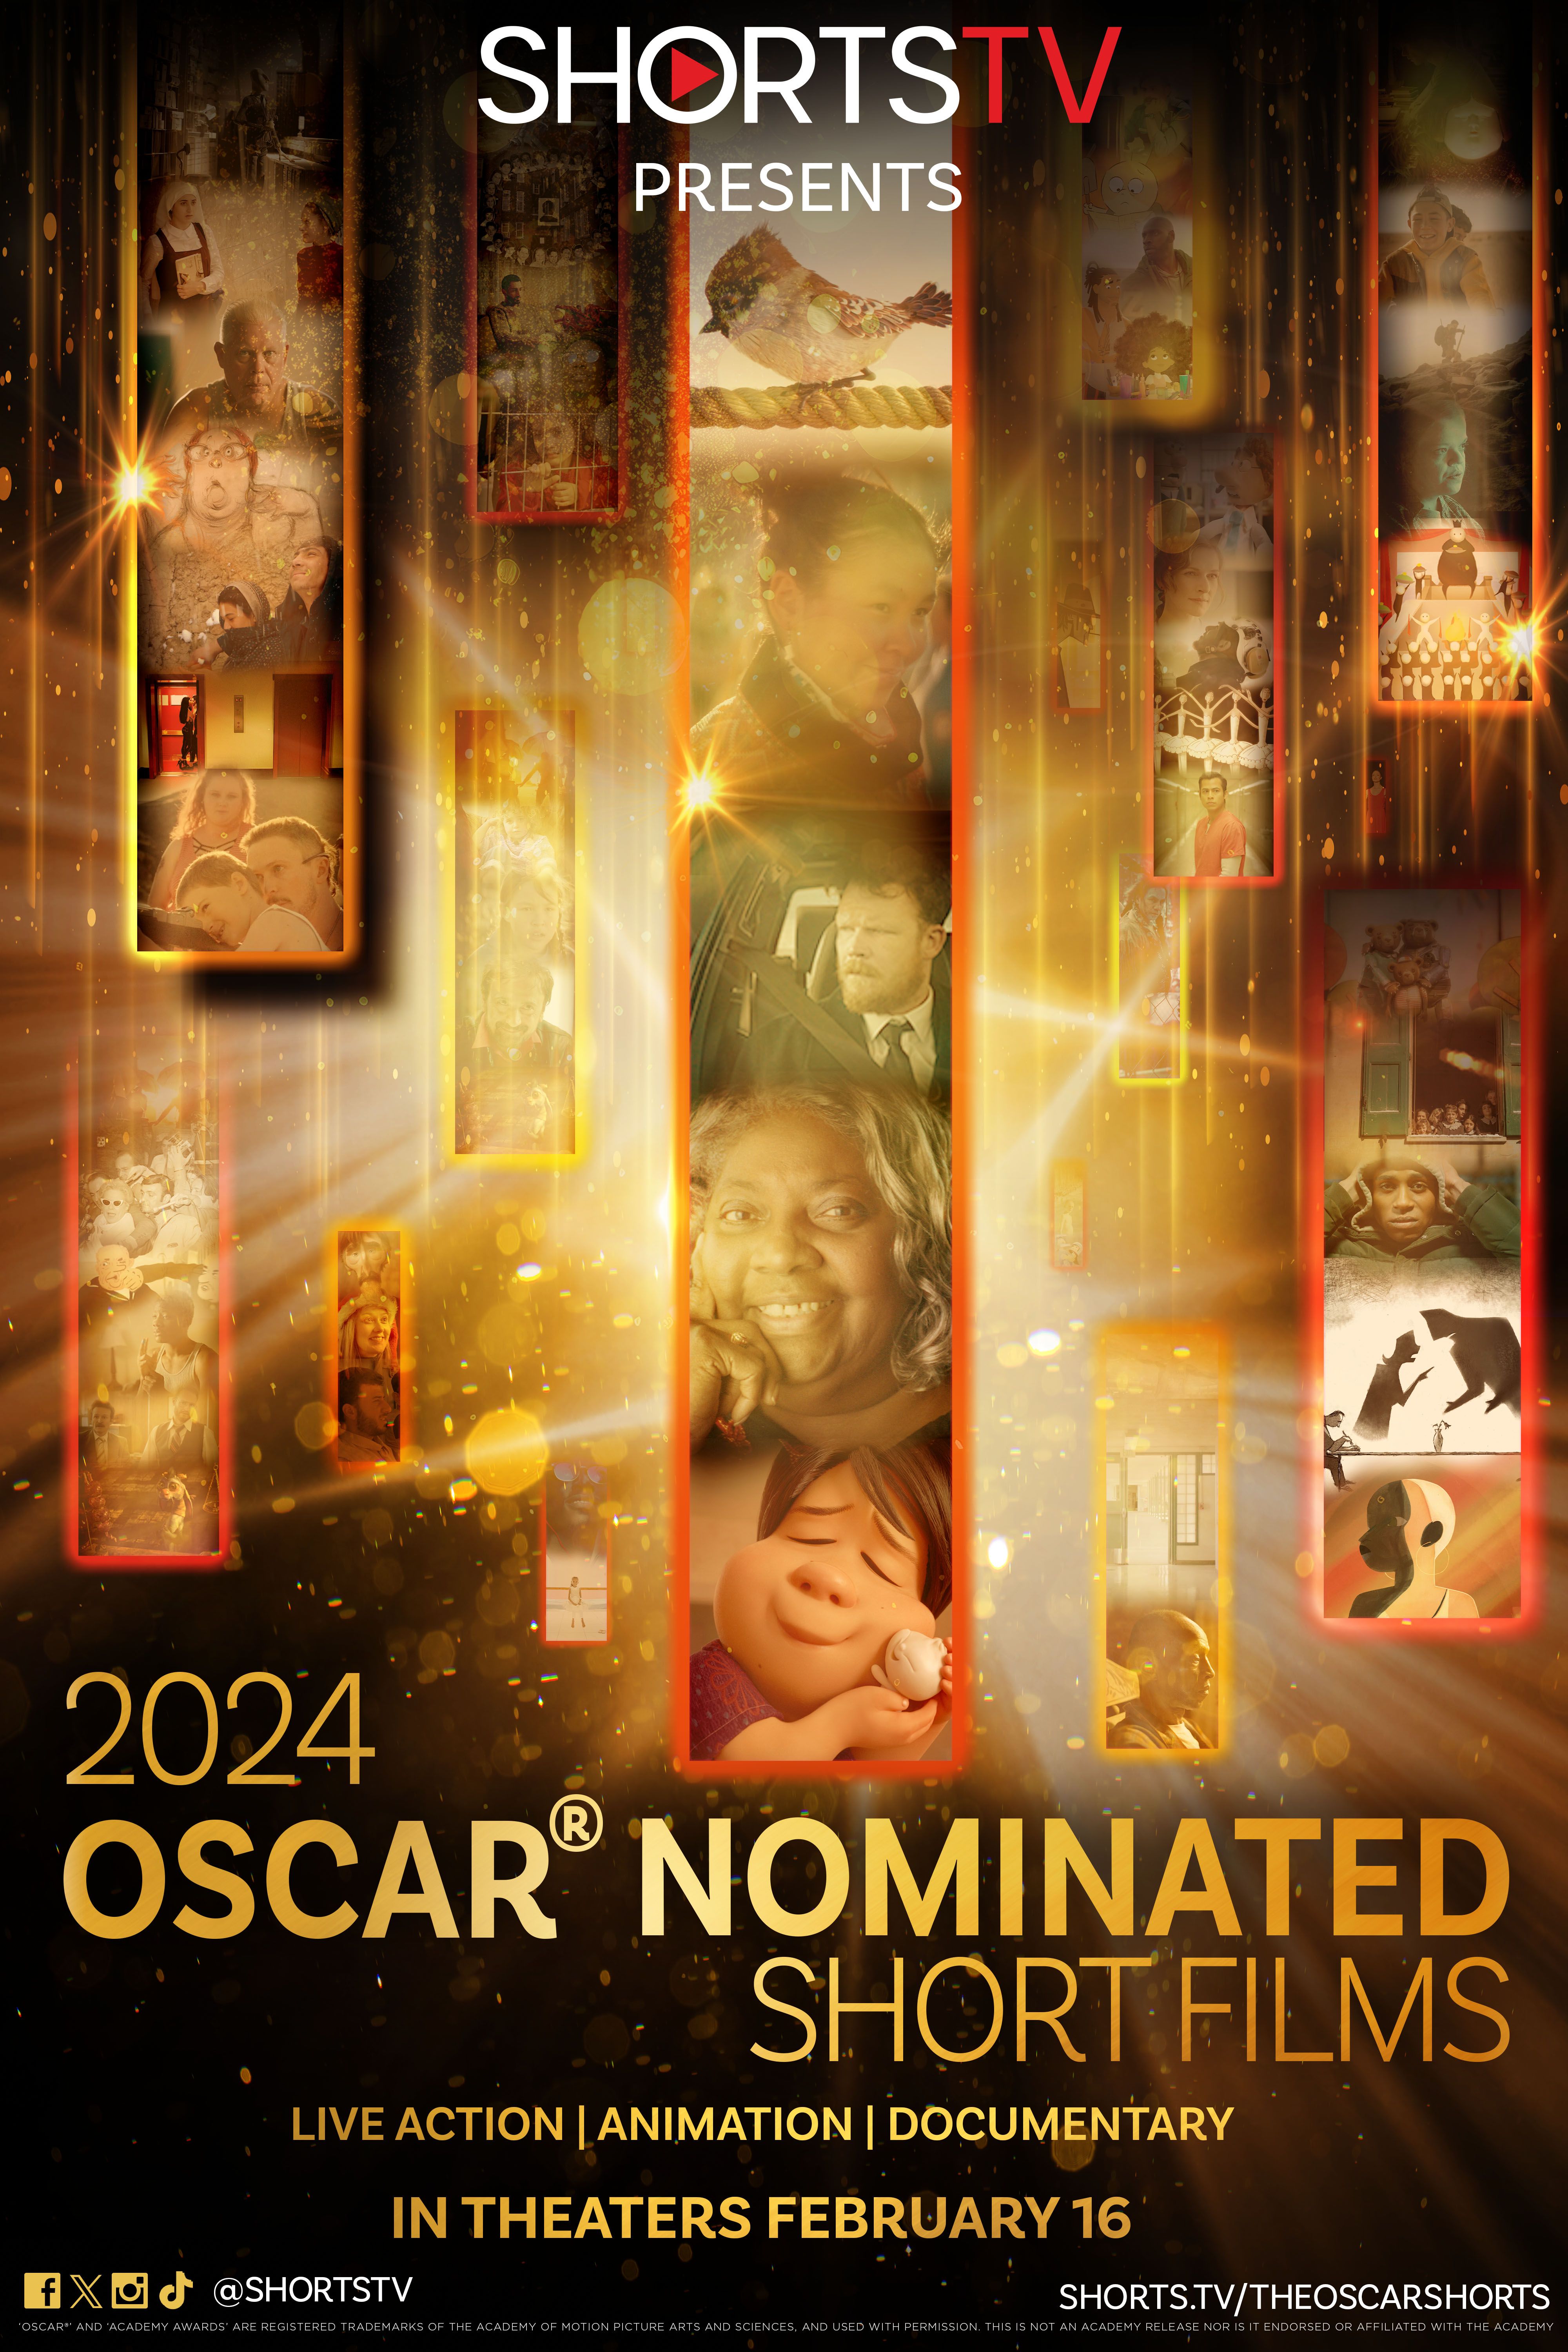 Info & showtimes for 2024 Oscar Nominated Short Films LiveAction